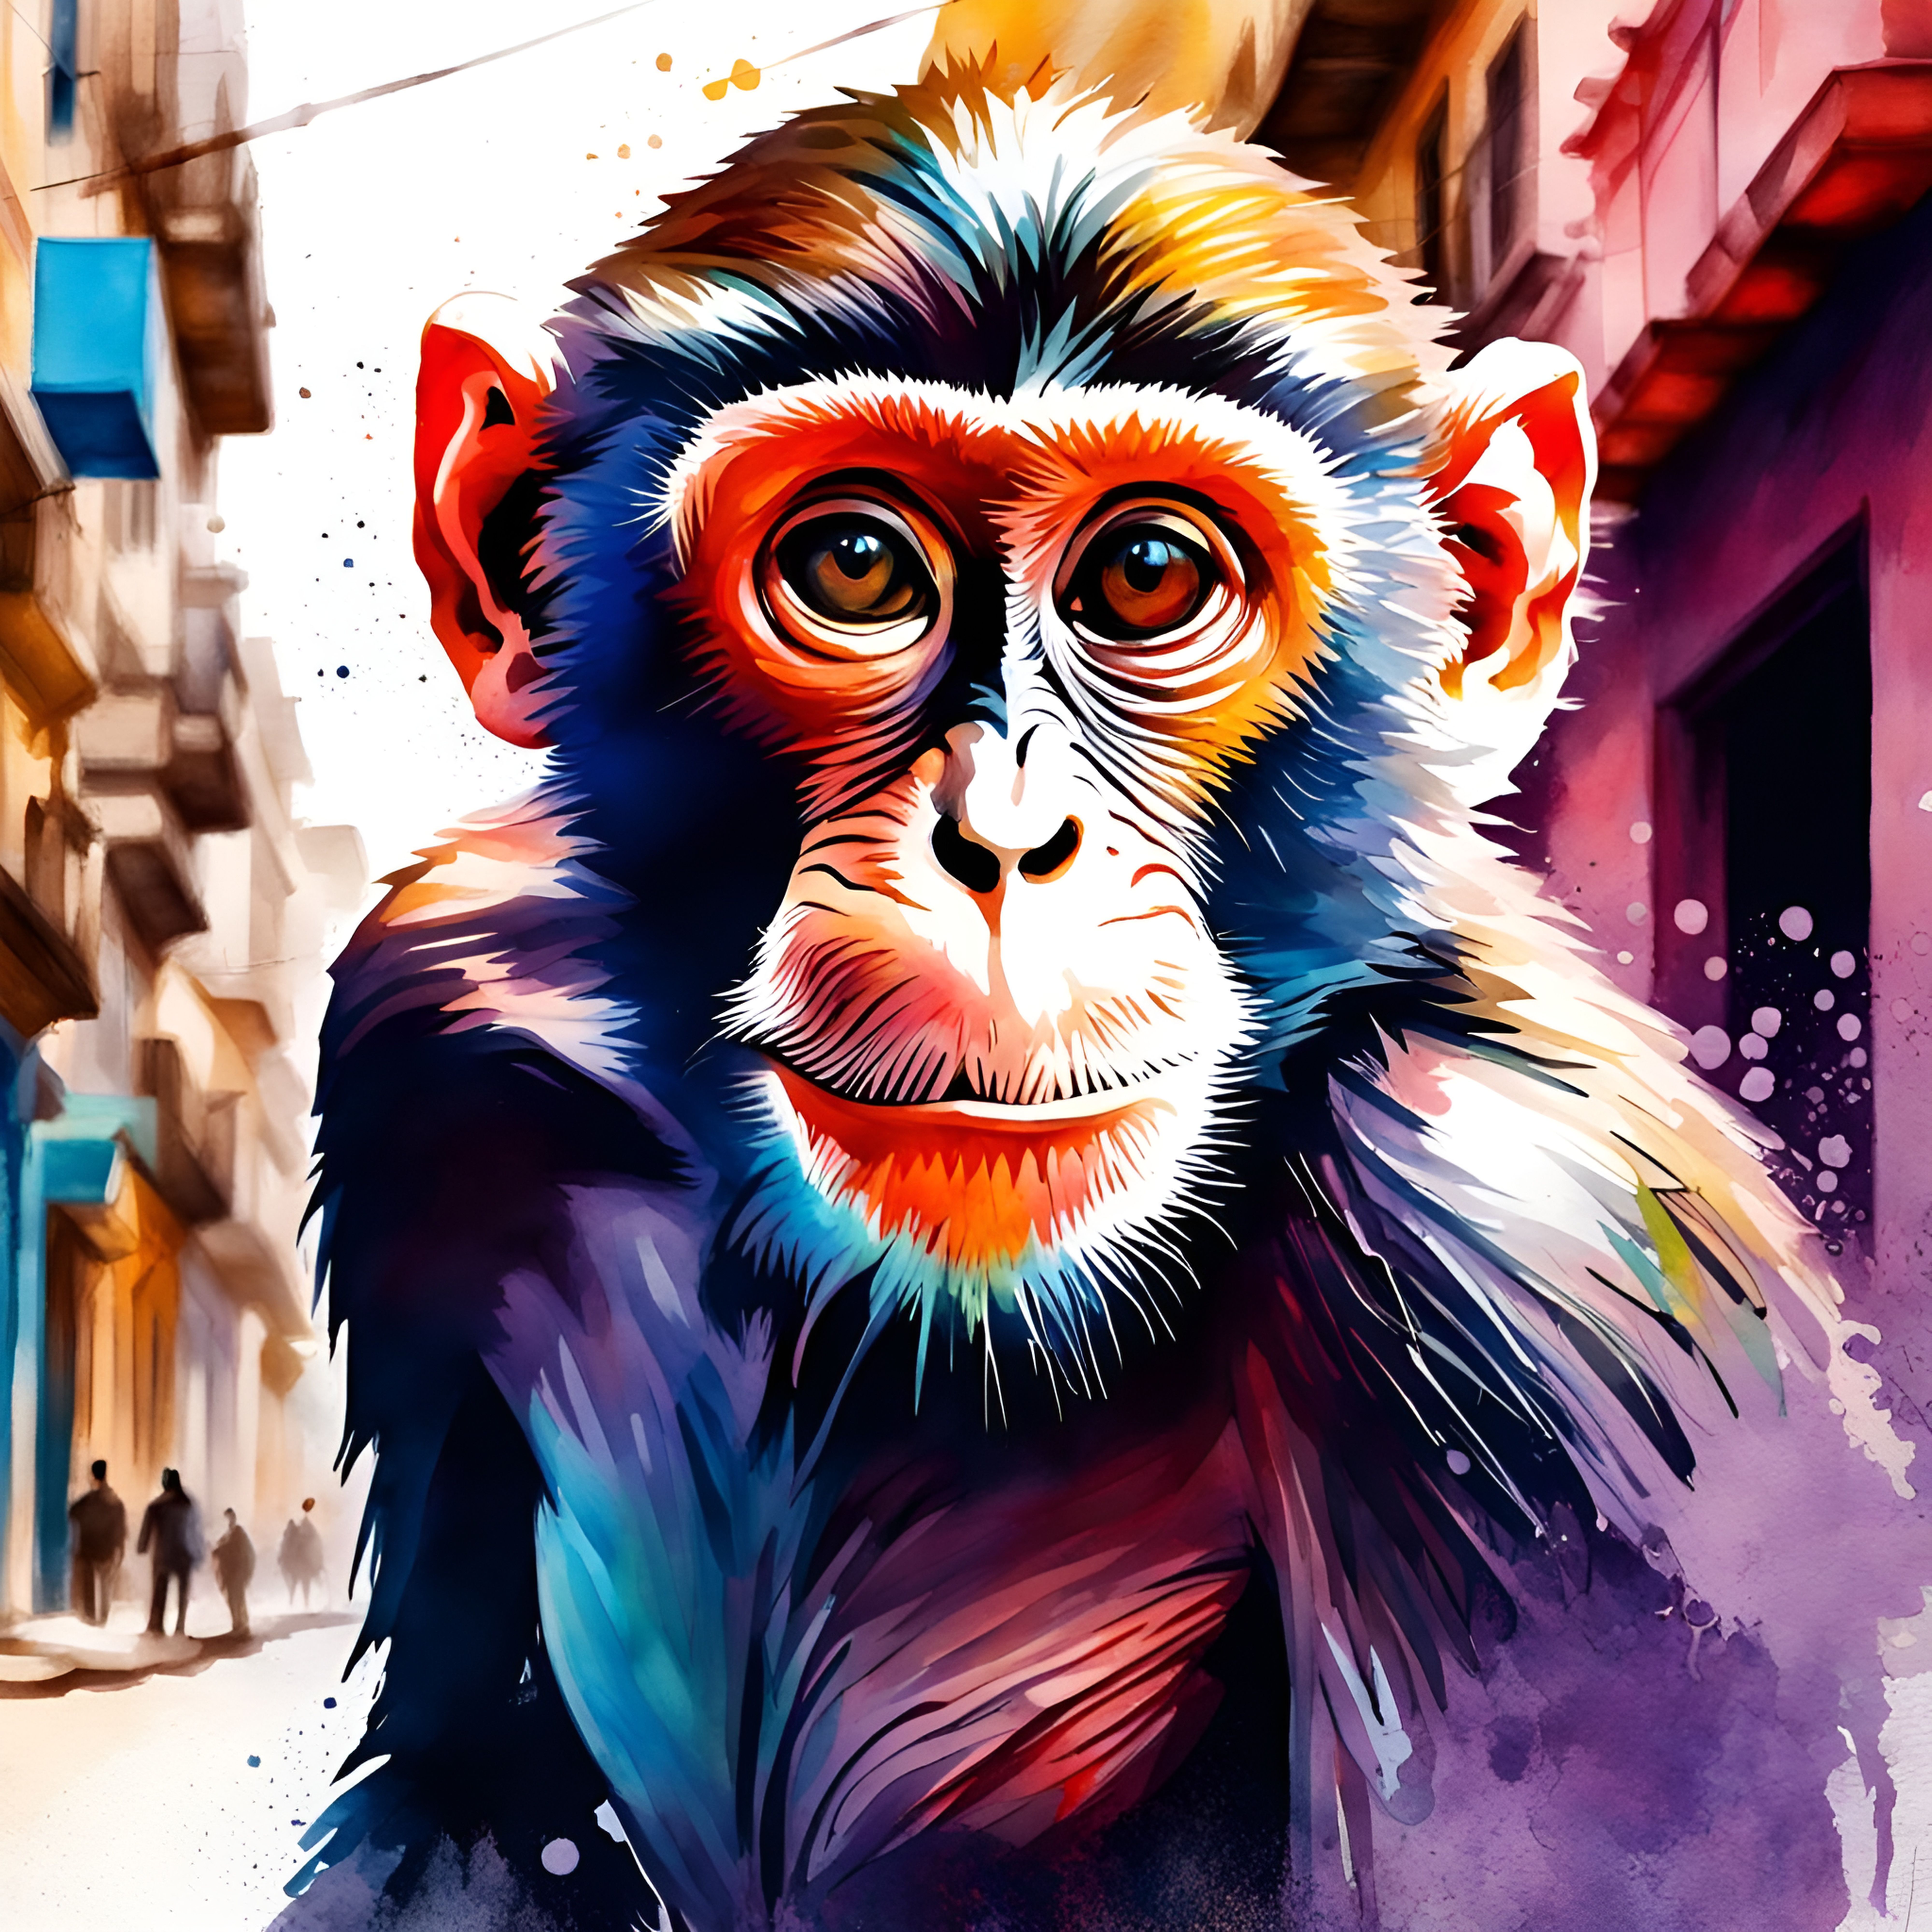 Digital Marketing – The Funky Monkey